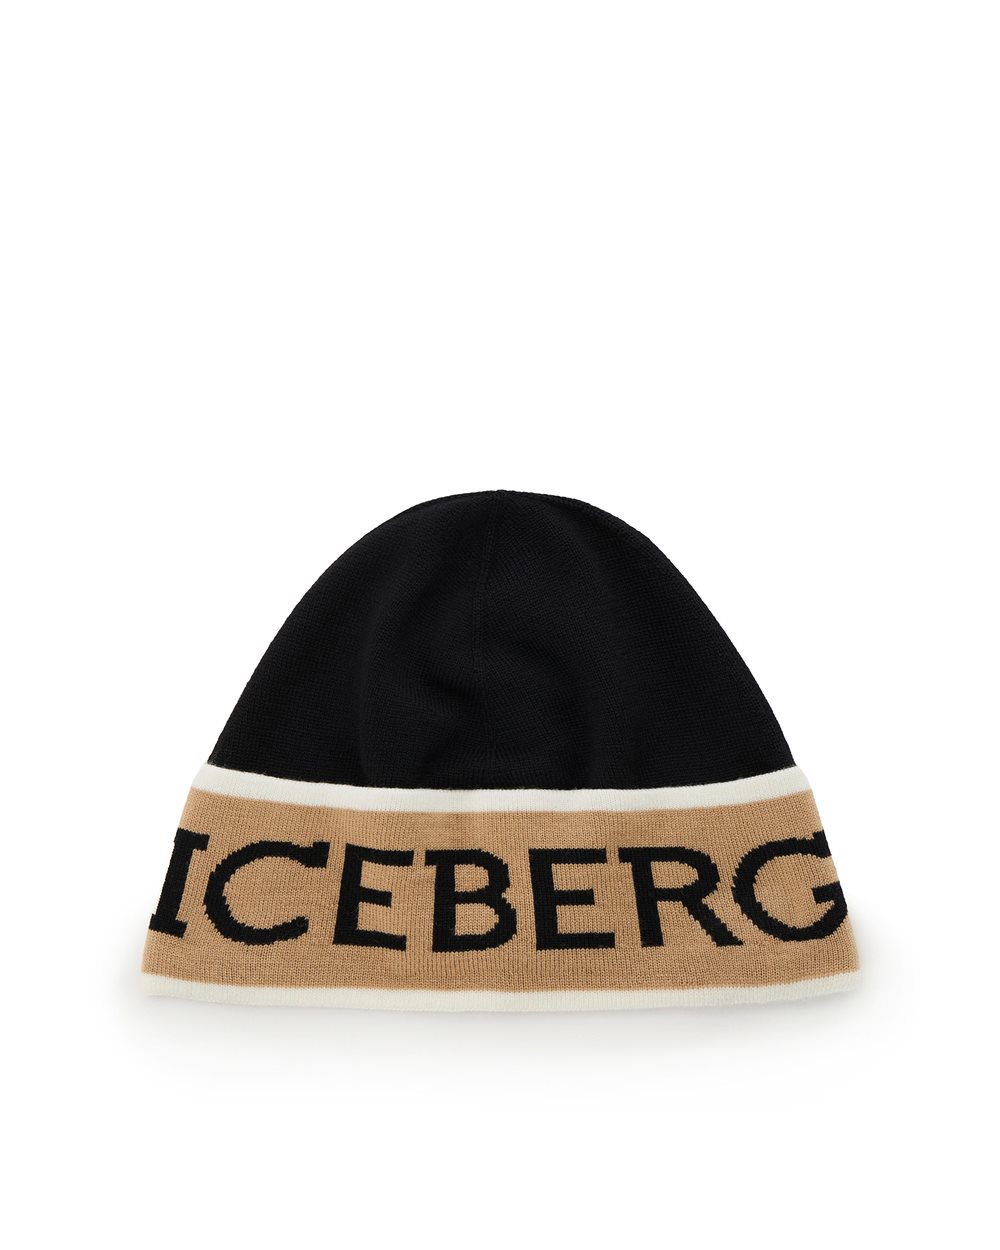 Black wool beanie with logo -  ( SECONDO STEP DE ) PROMO SALDI UP TO 50% | Iceberg - Official Website